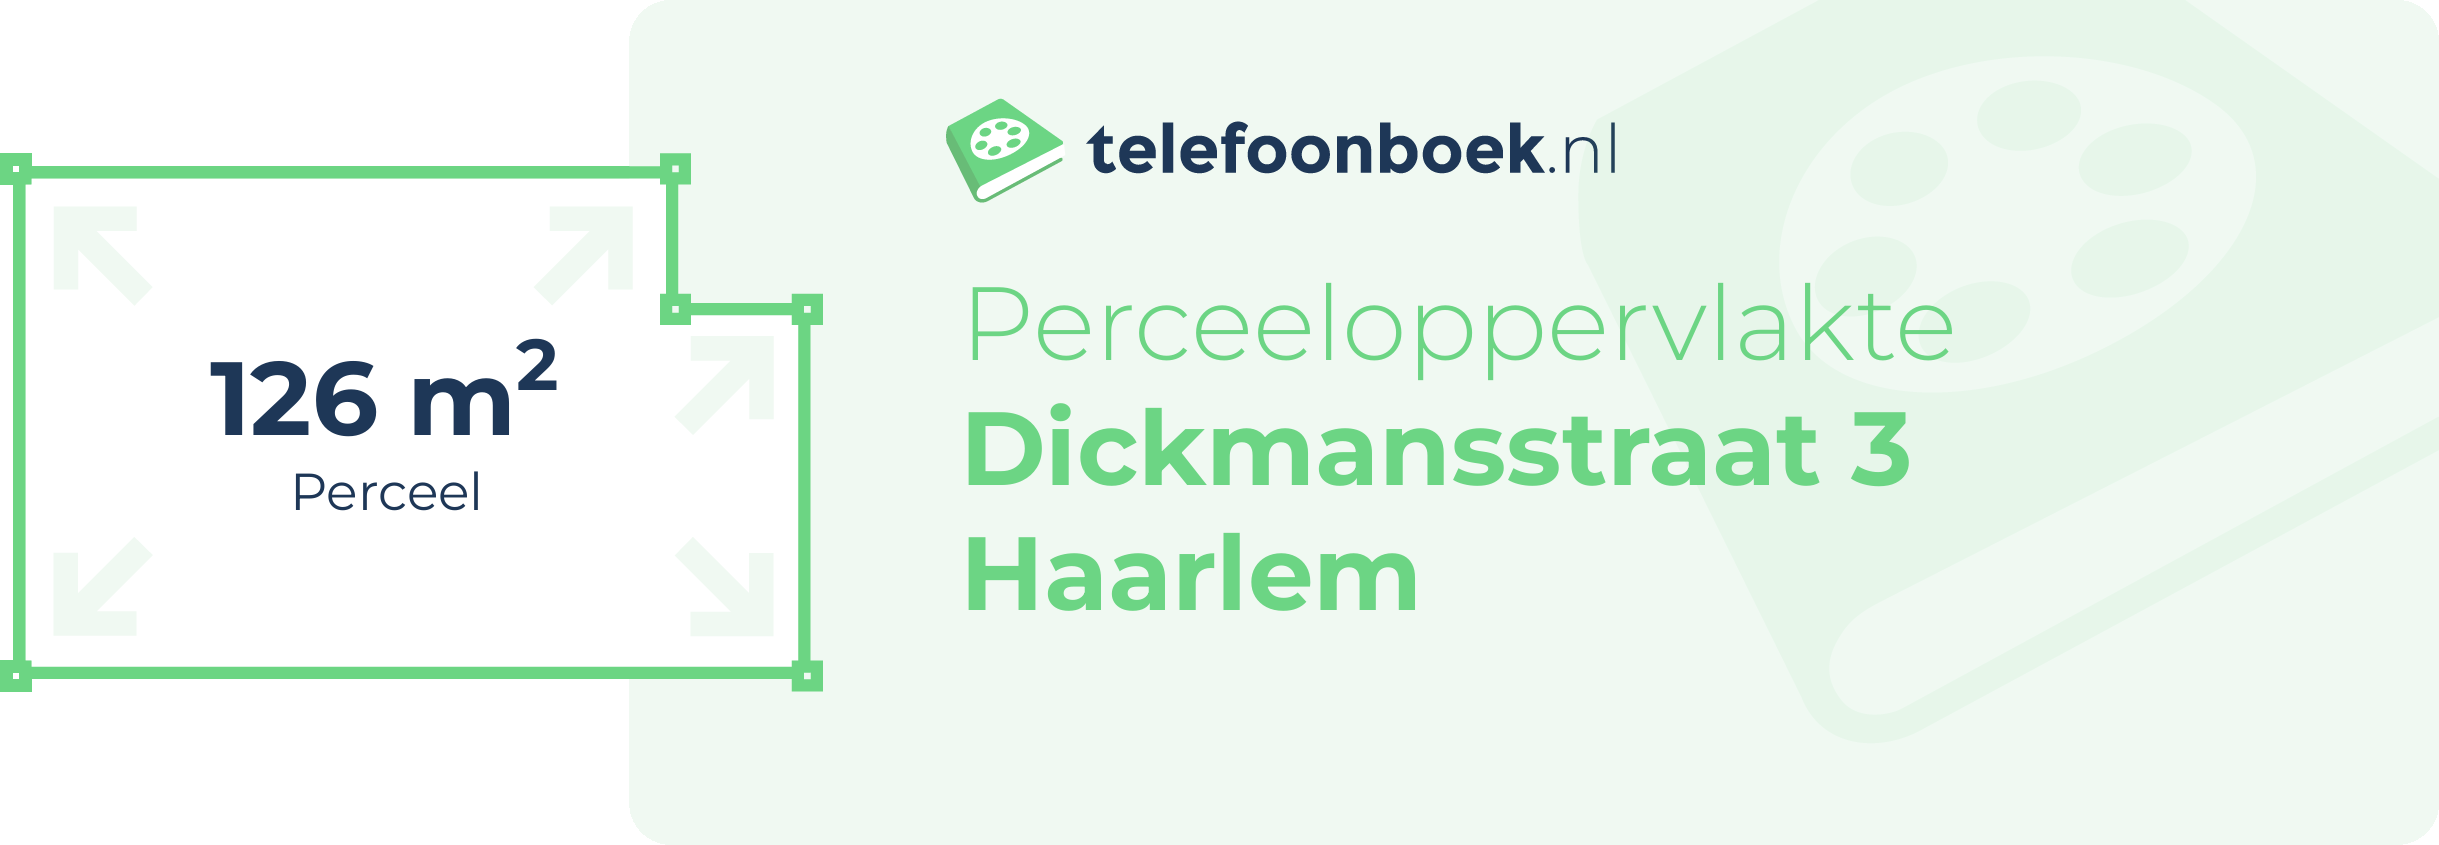 Perceeloppervlakte Dickmansstraat 3 Haarlem